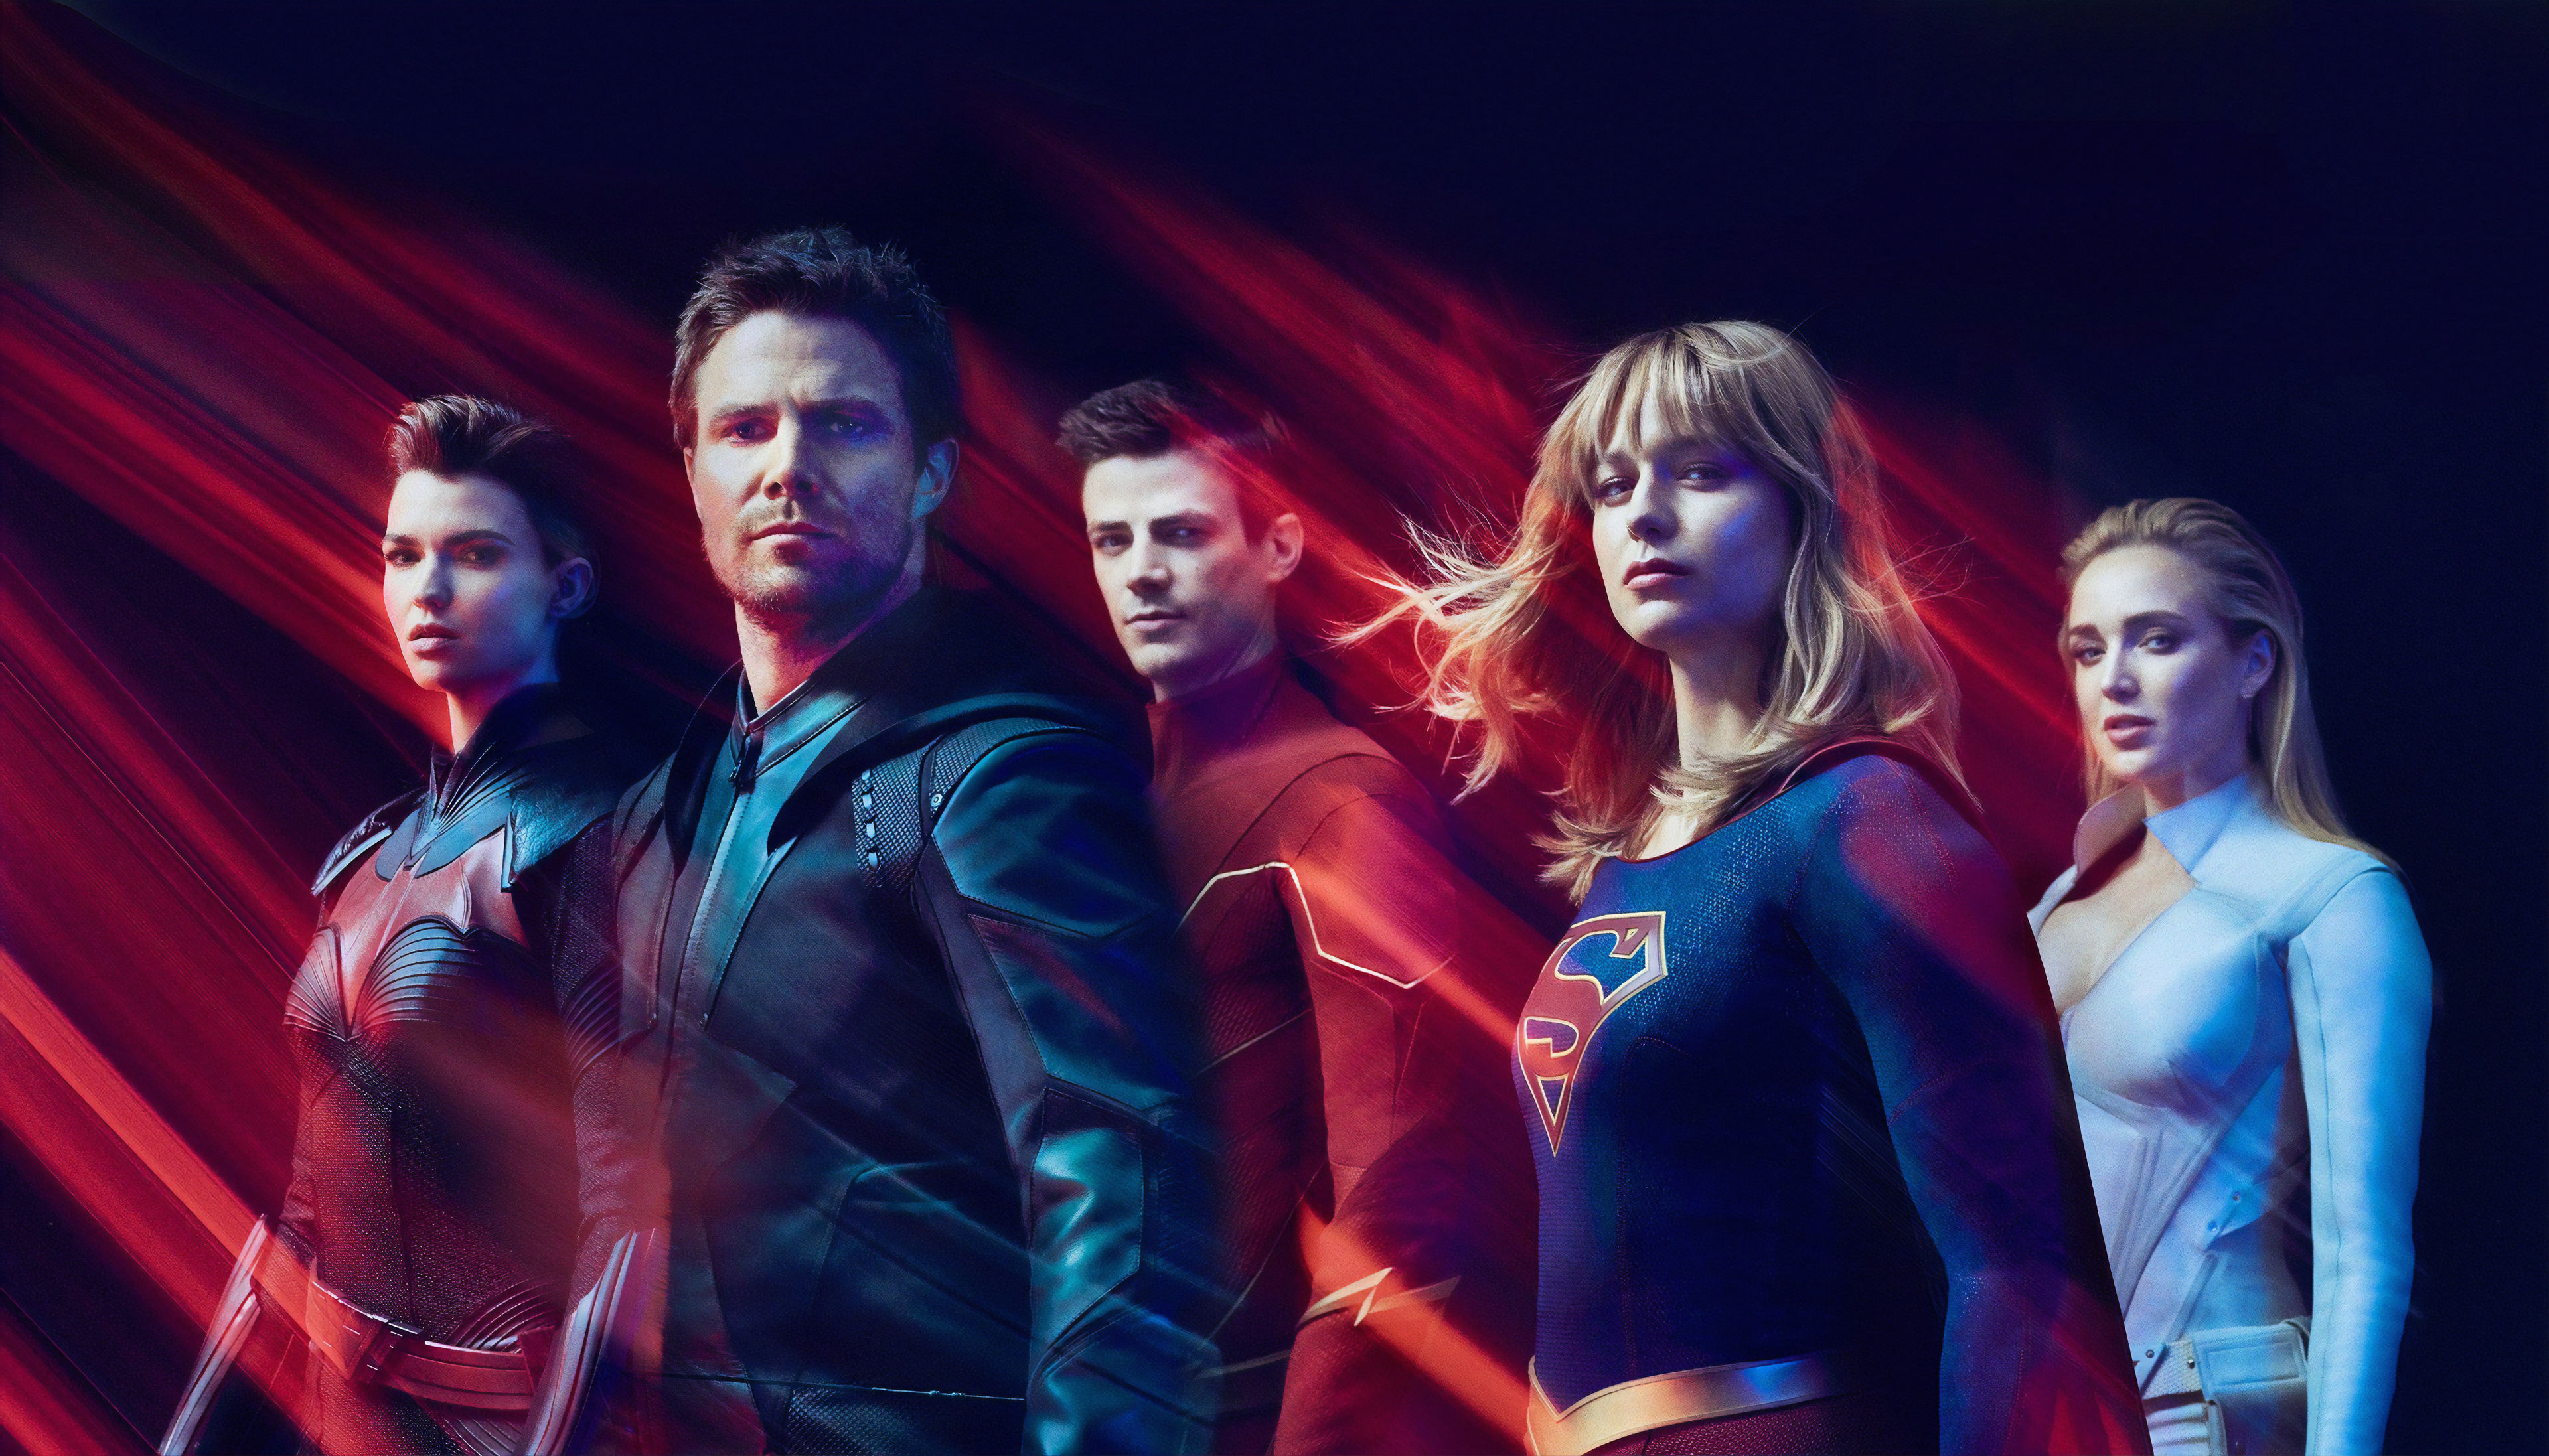 CW DC Superhero 2019 Wallpaper, HD Superheroes 4K ...